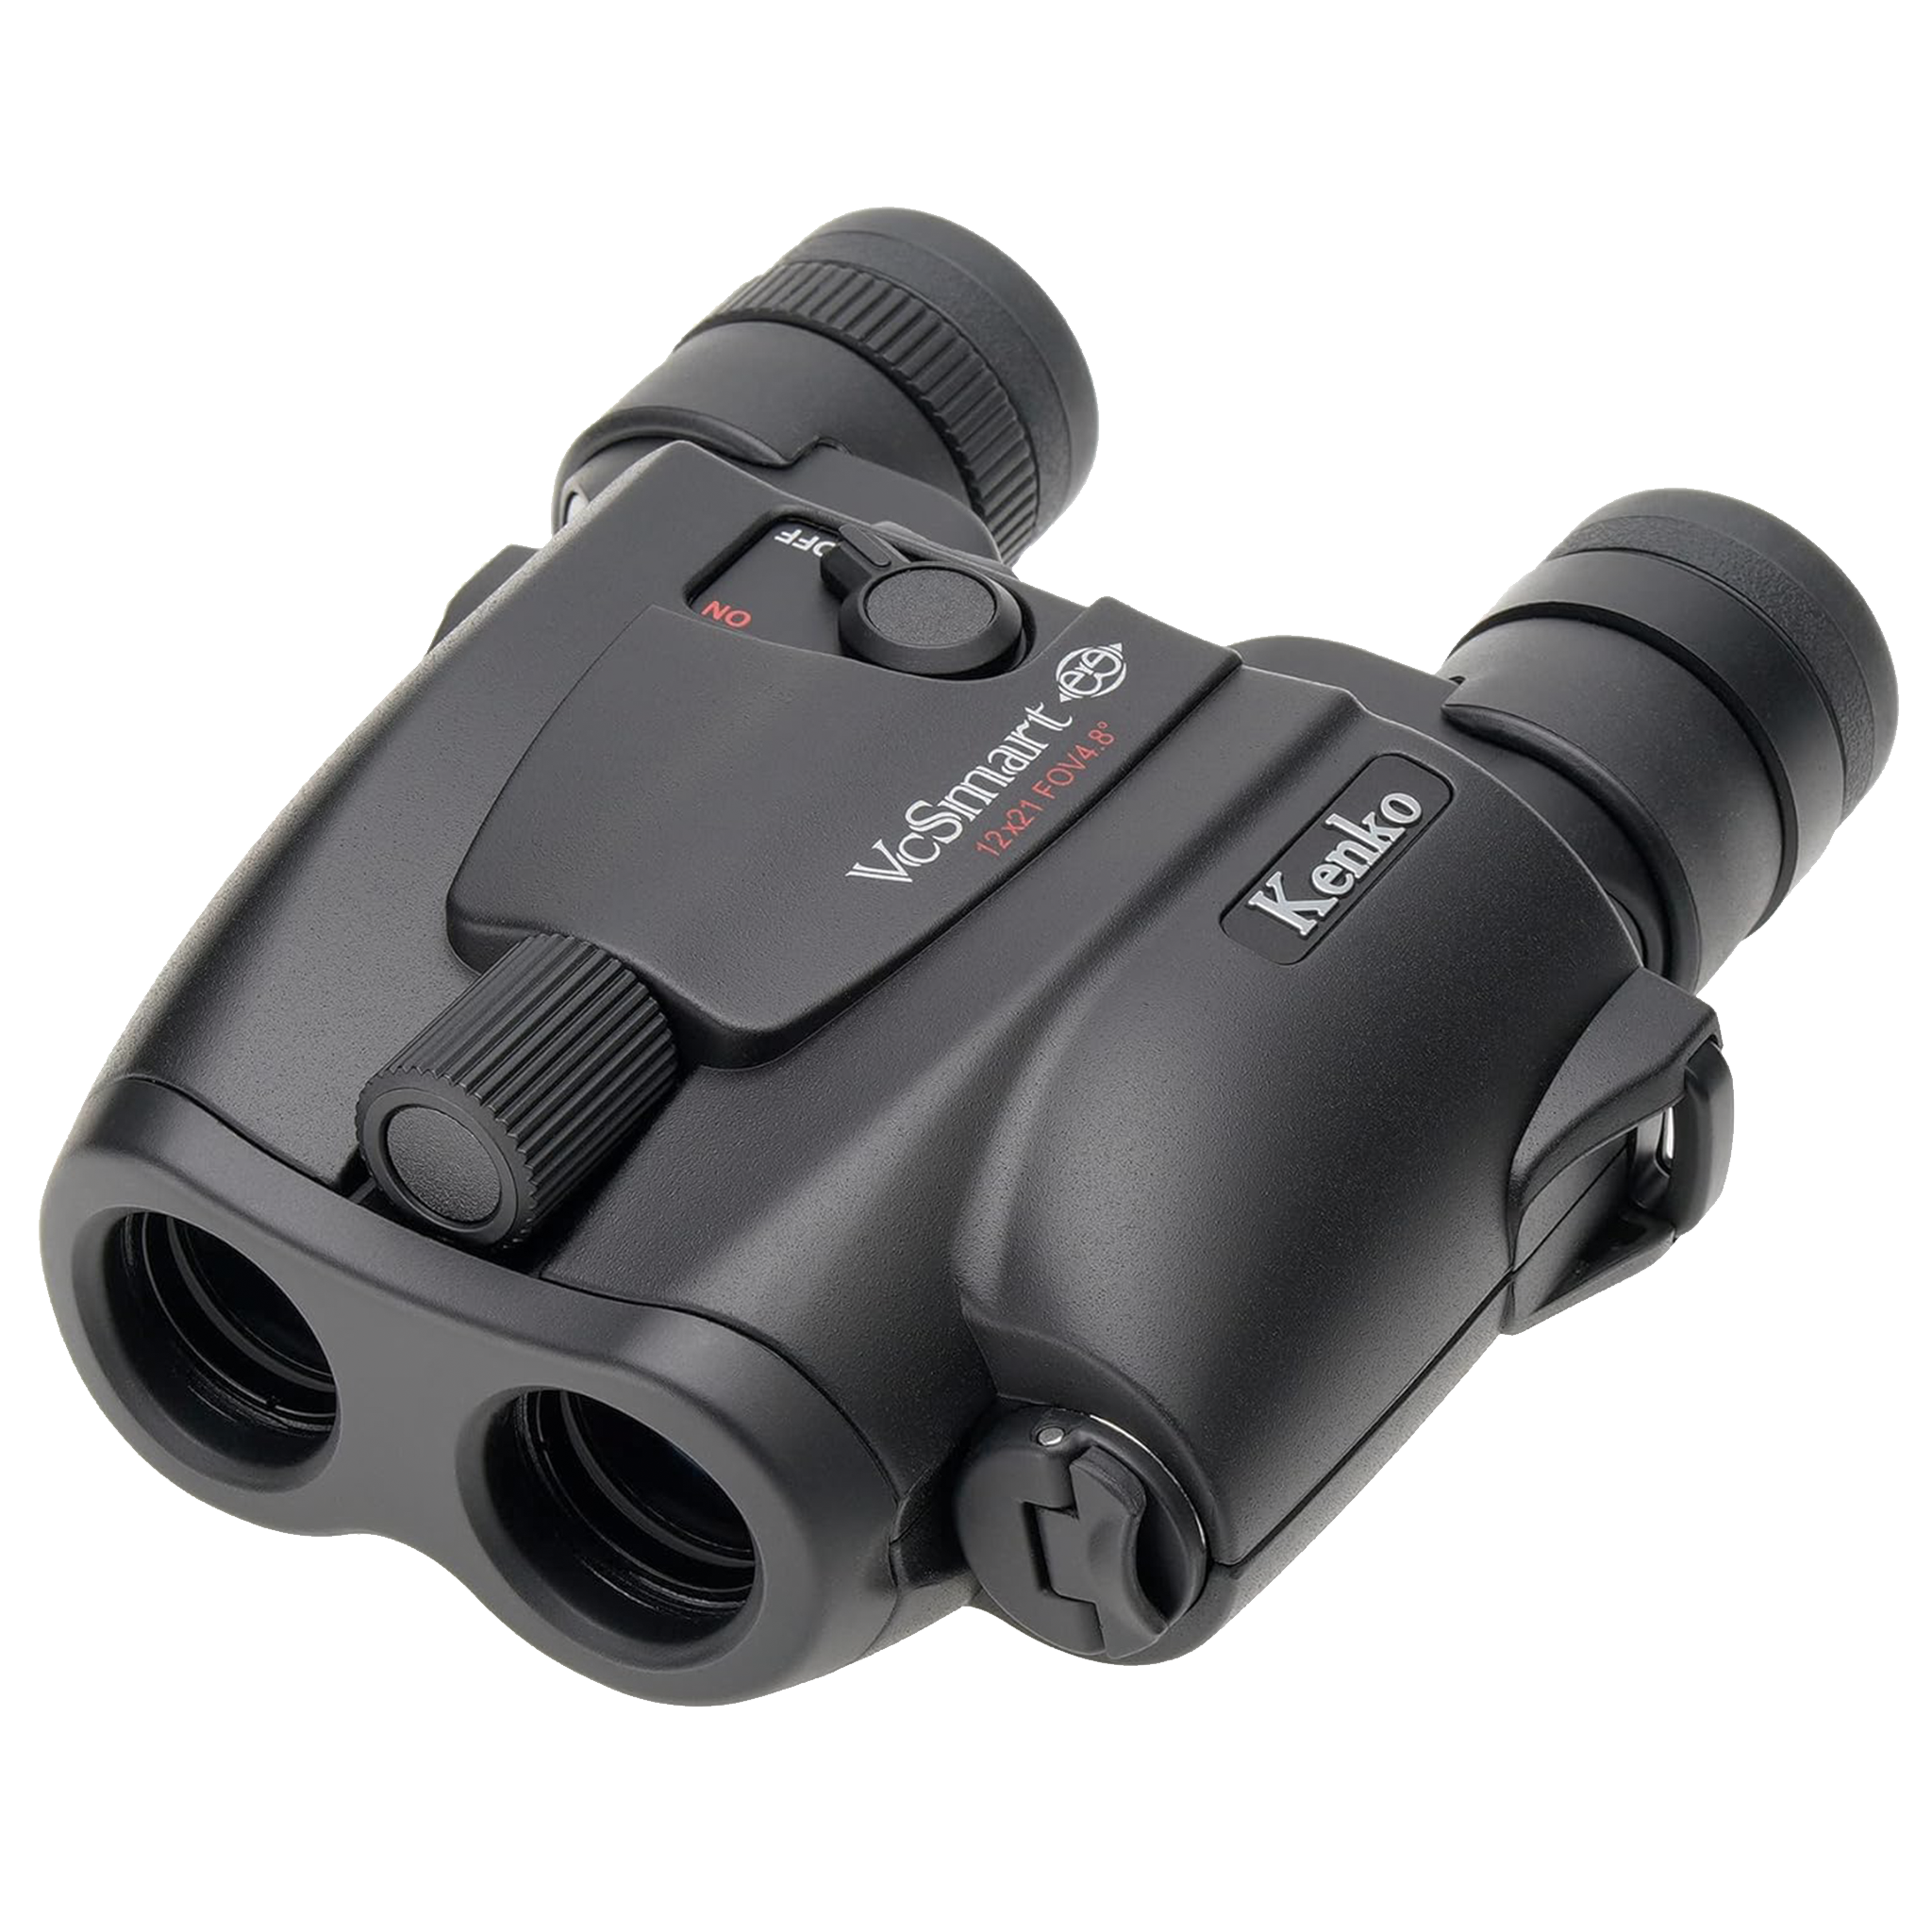 Kenko Vibration Control Binocular, VC Smart Compact 8x21 / 12x21, Whit